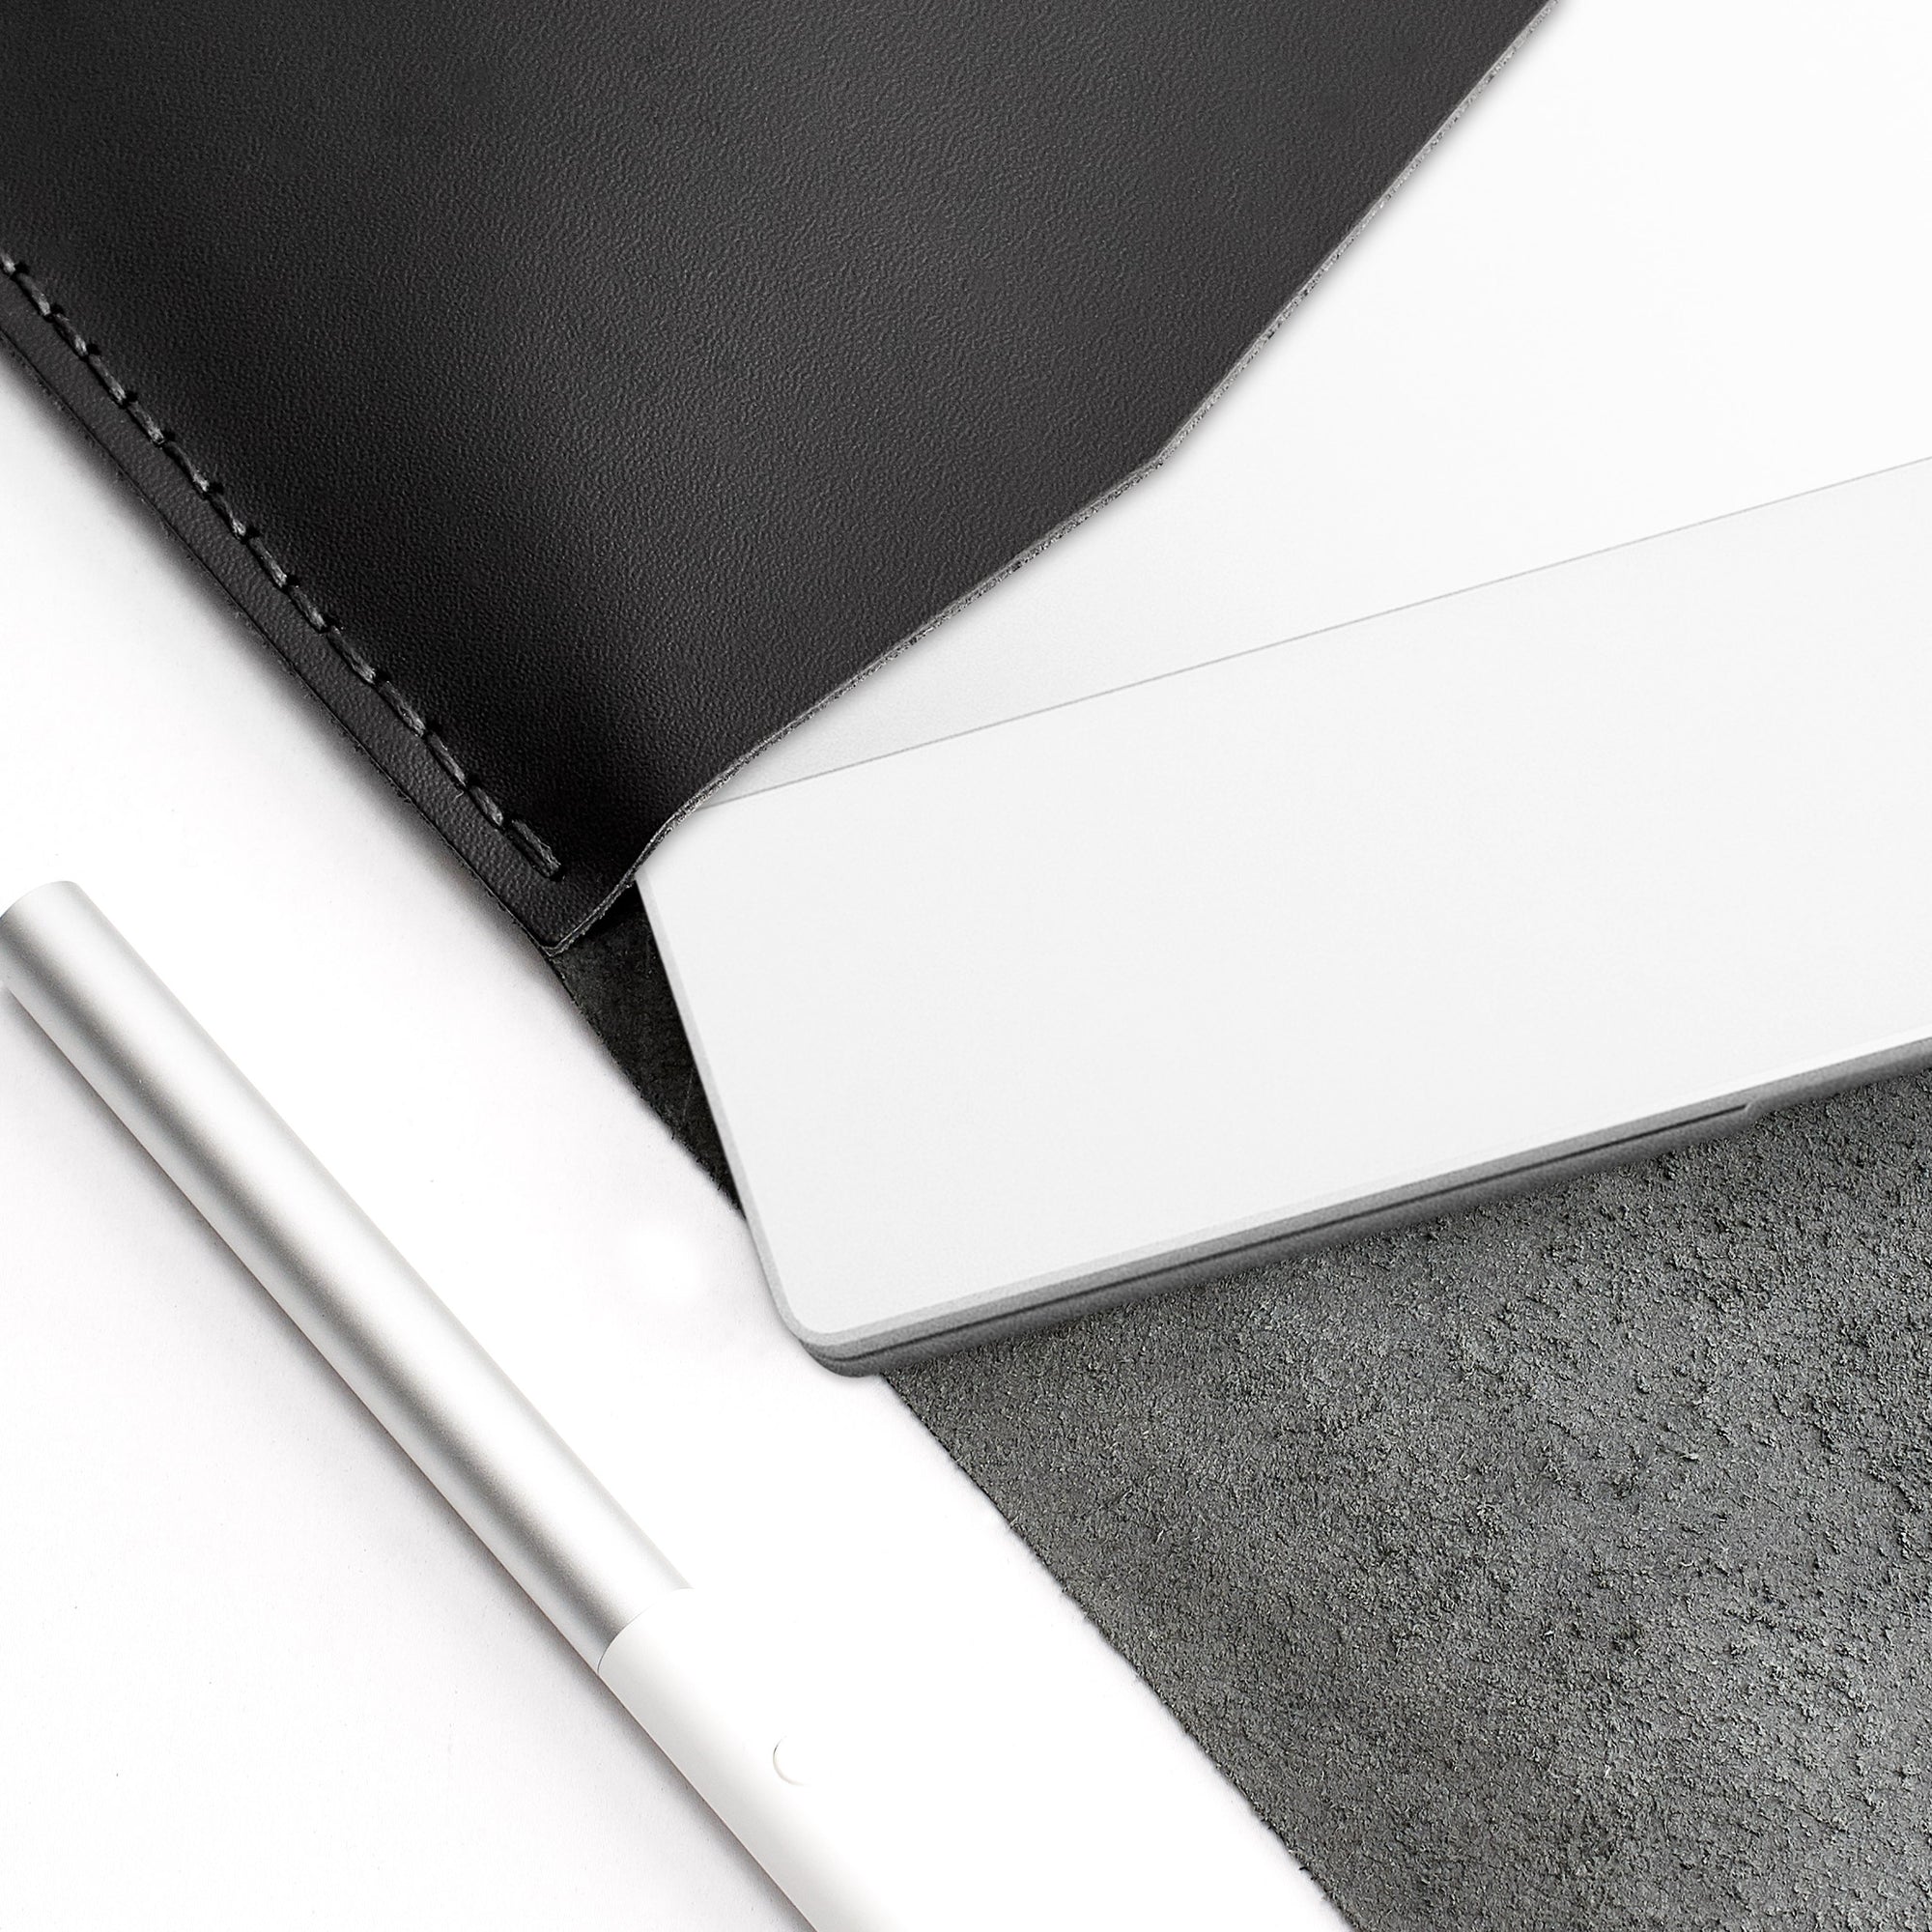 Handstitch detail. Google Pixelbook Black leather case with pen holder. Pixelbook laptop mens folio